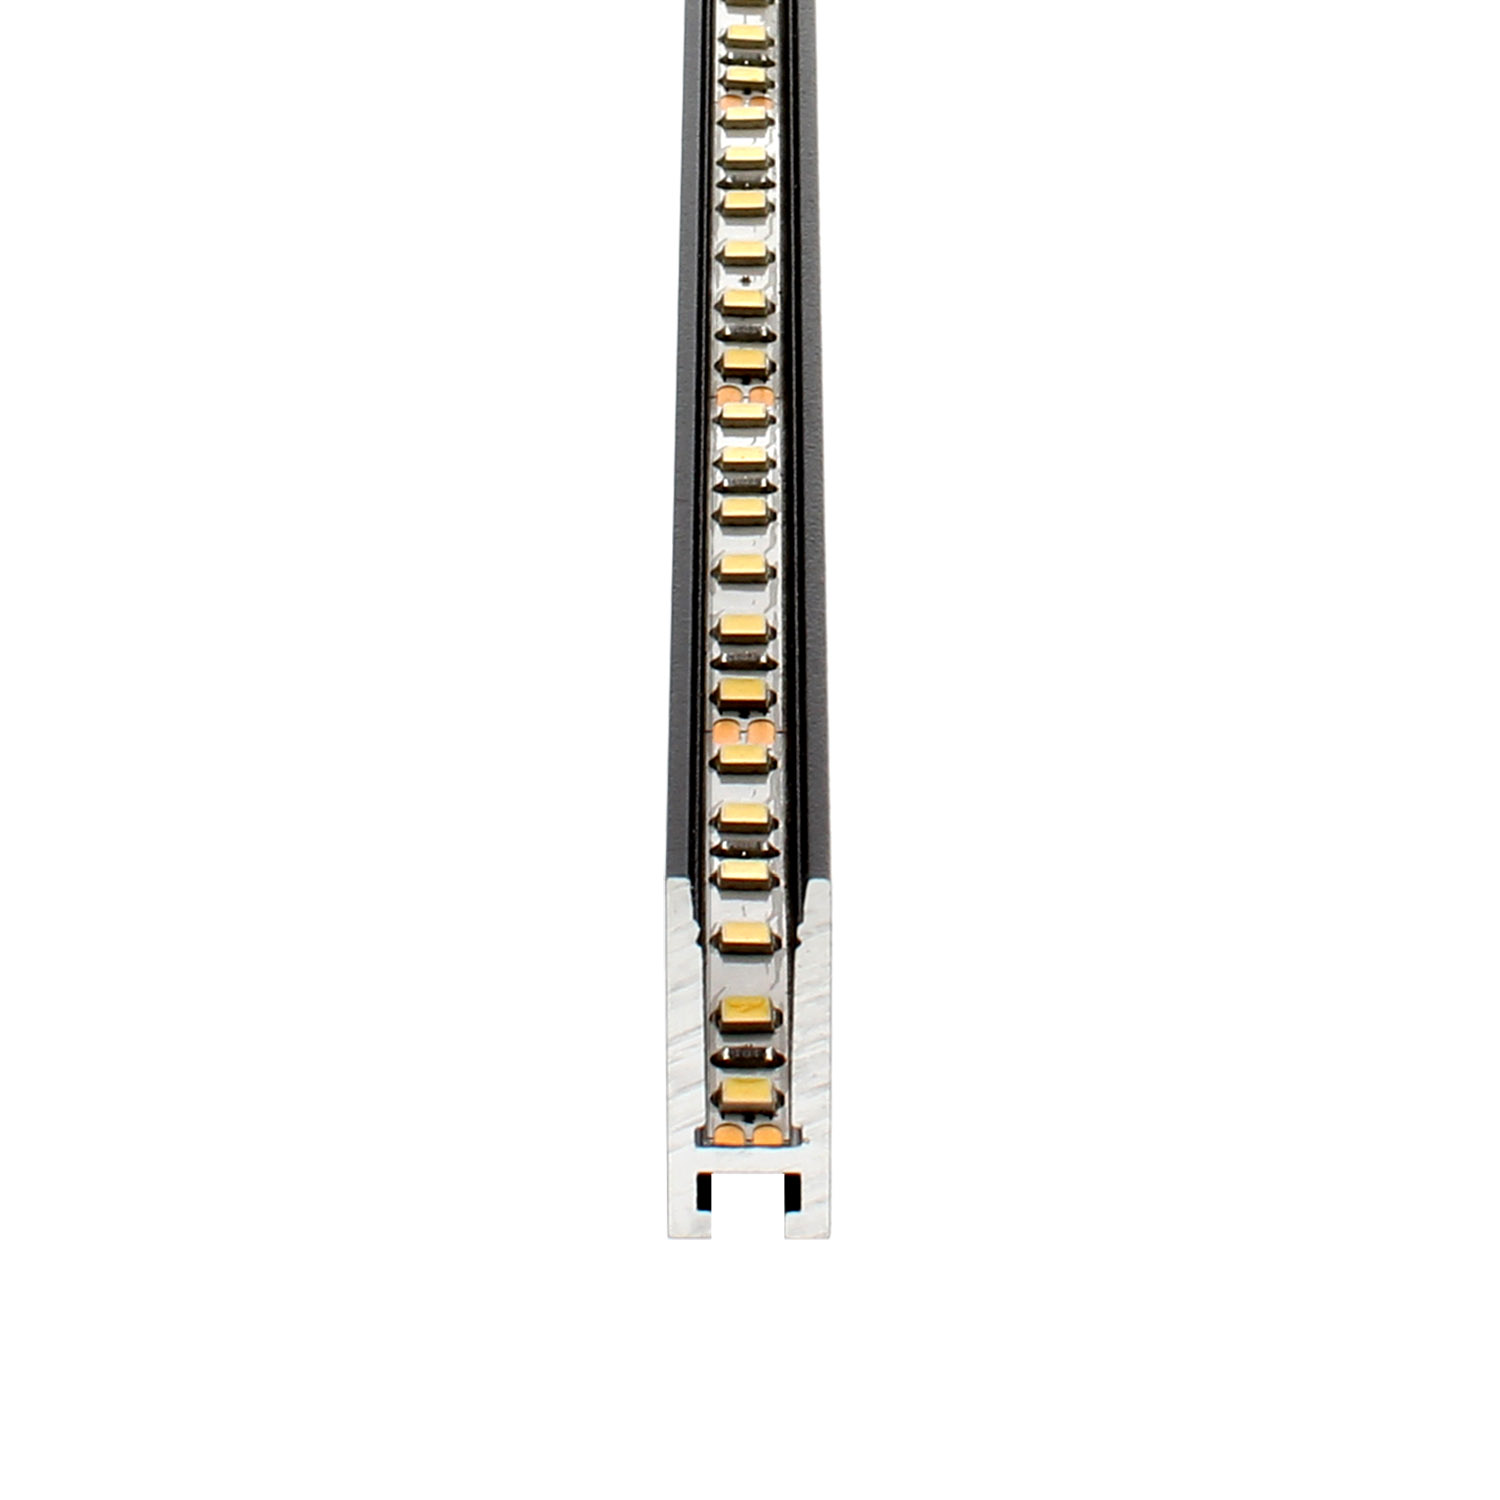 KIT - Perfil aluminio LOX para tiras LED, 2 metros, negro - LEDBO